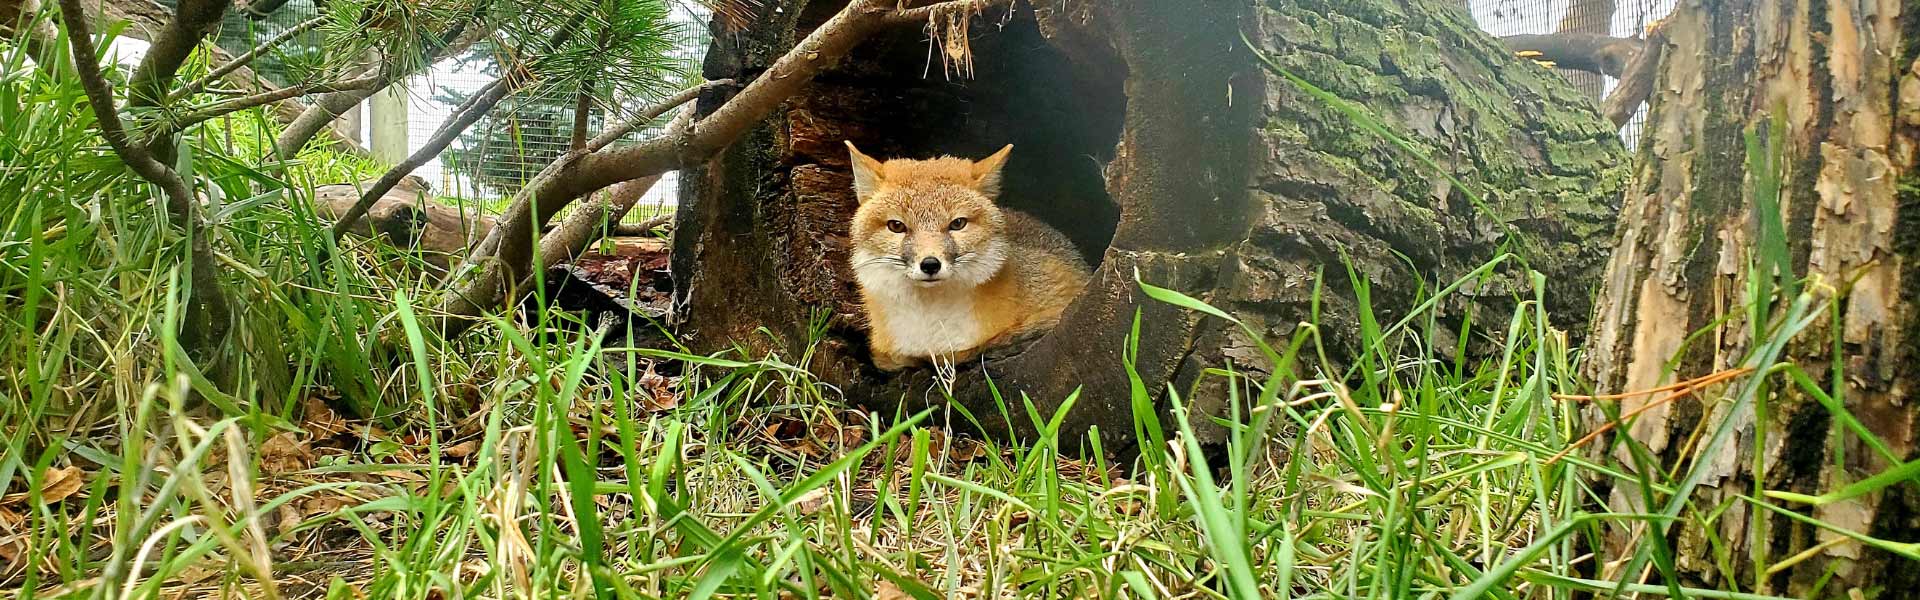 A Swift Fox lying inside a hollowed out log.